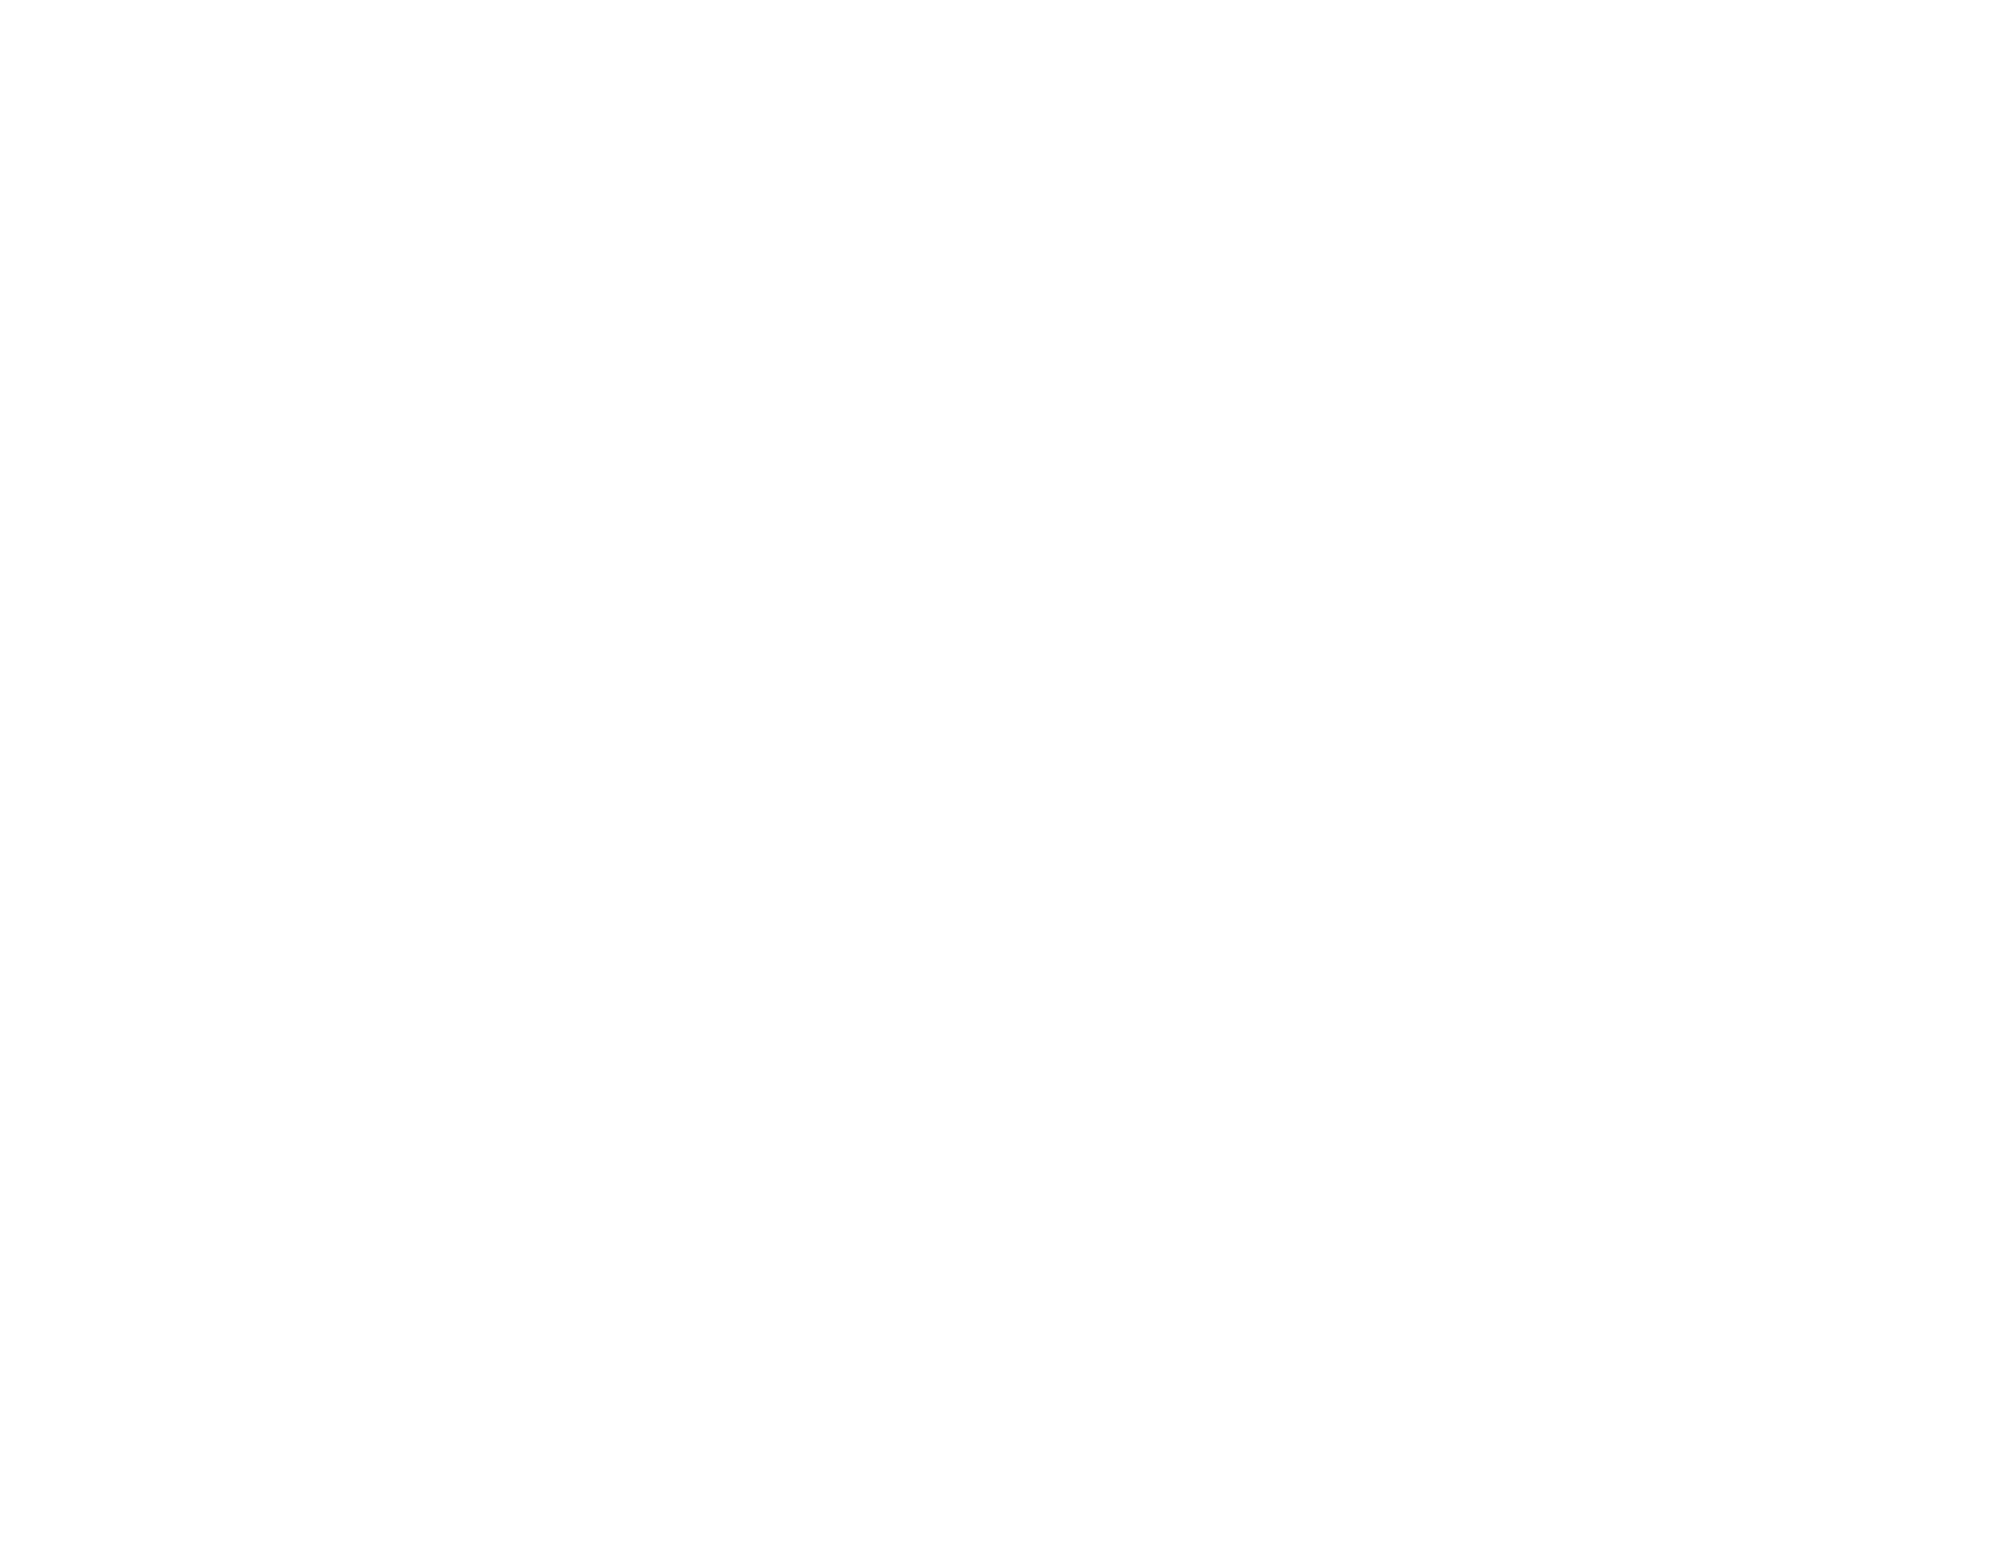 Soho House - WHITE.png